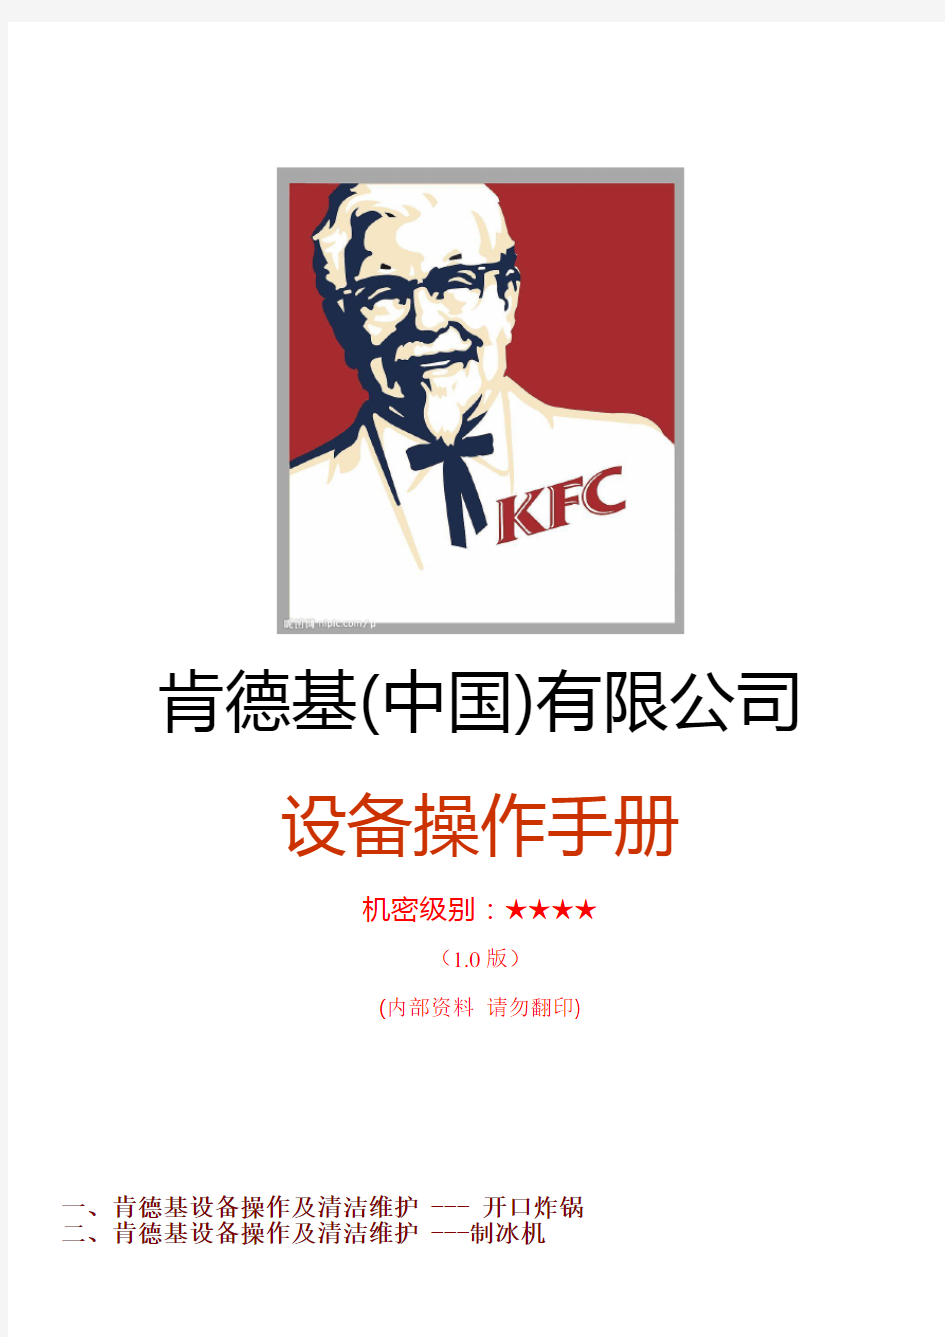 KFC肯德基-KFC肯德基设备操作手册